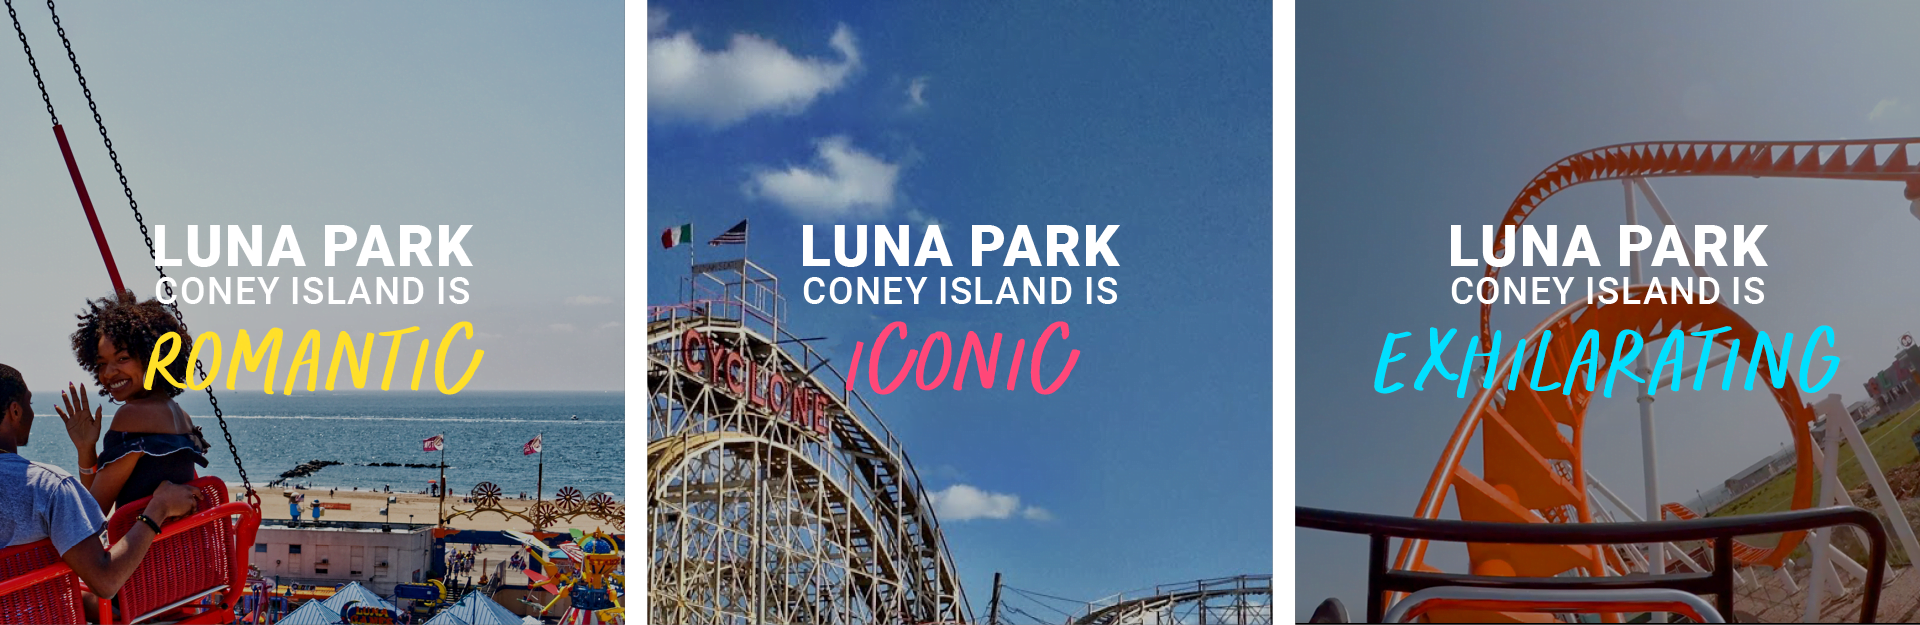 DAVID.MARKET - Luna Park in Coney Island Case Study - 2022 Opening Day Visuals